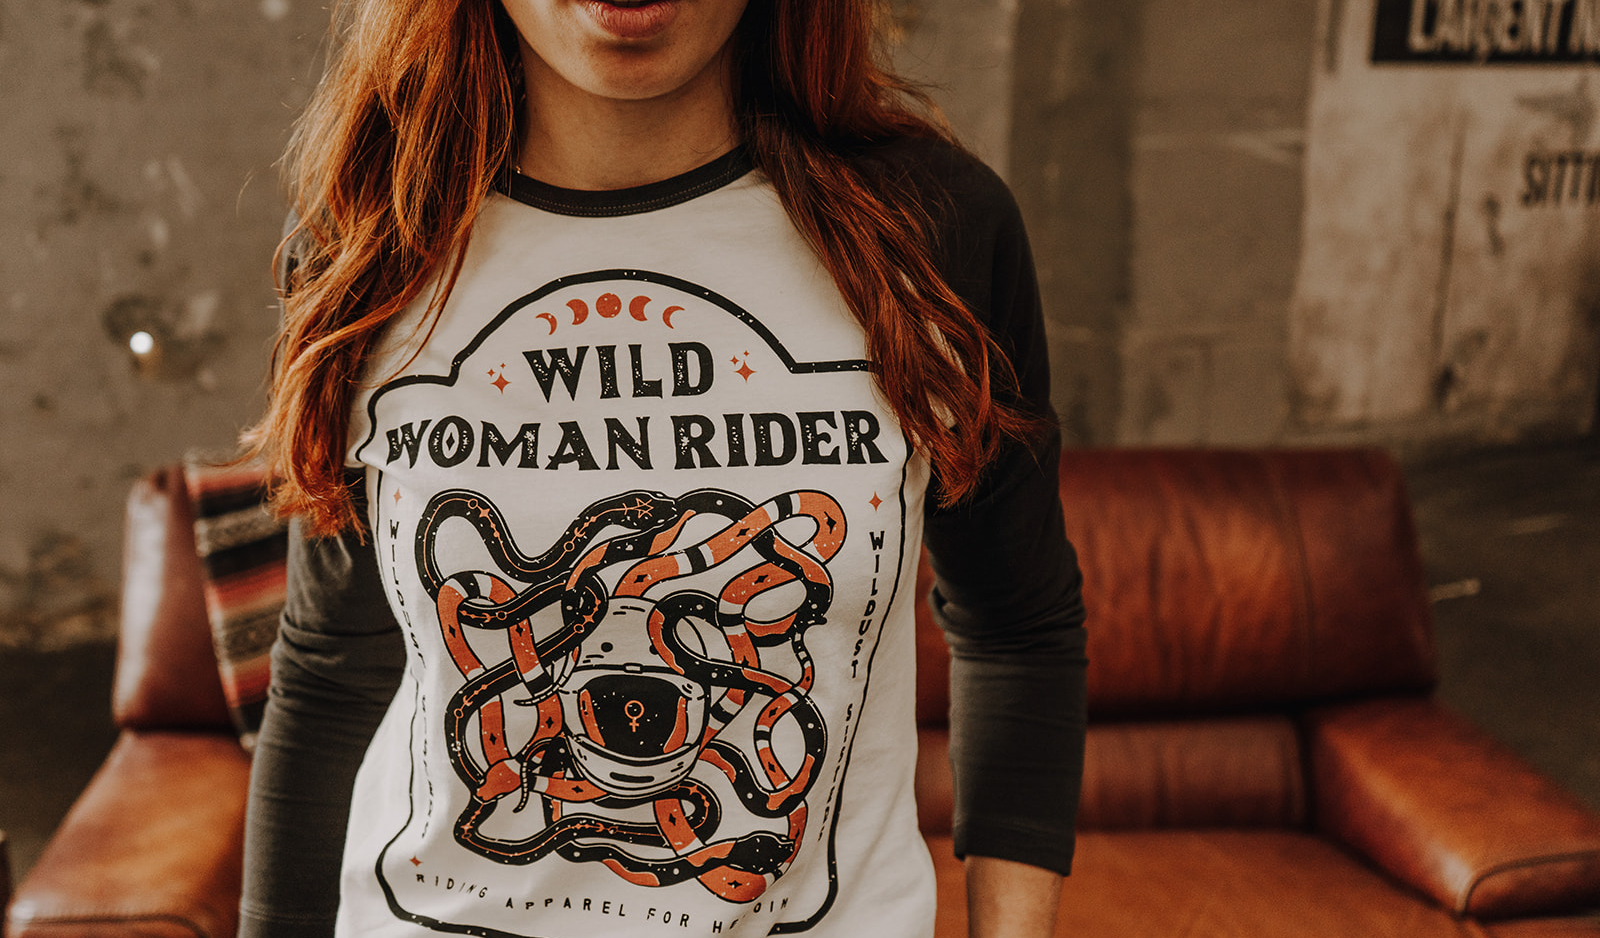 woman rider by wildust, baseball tee